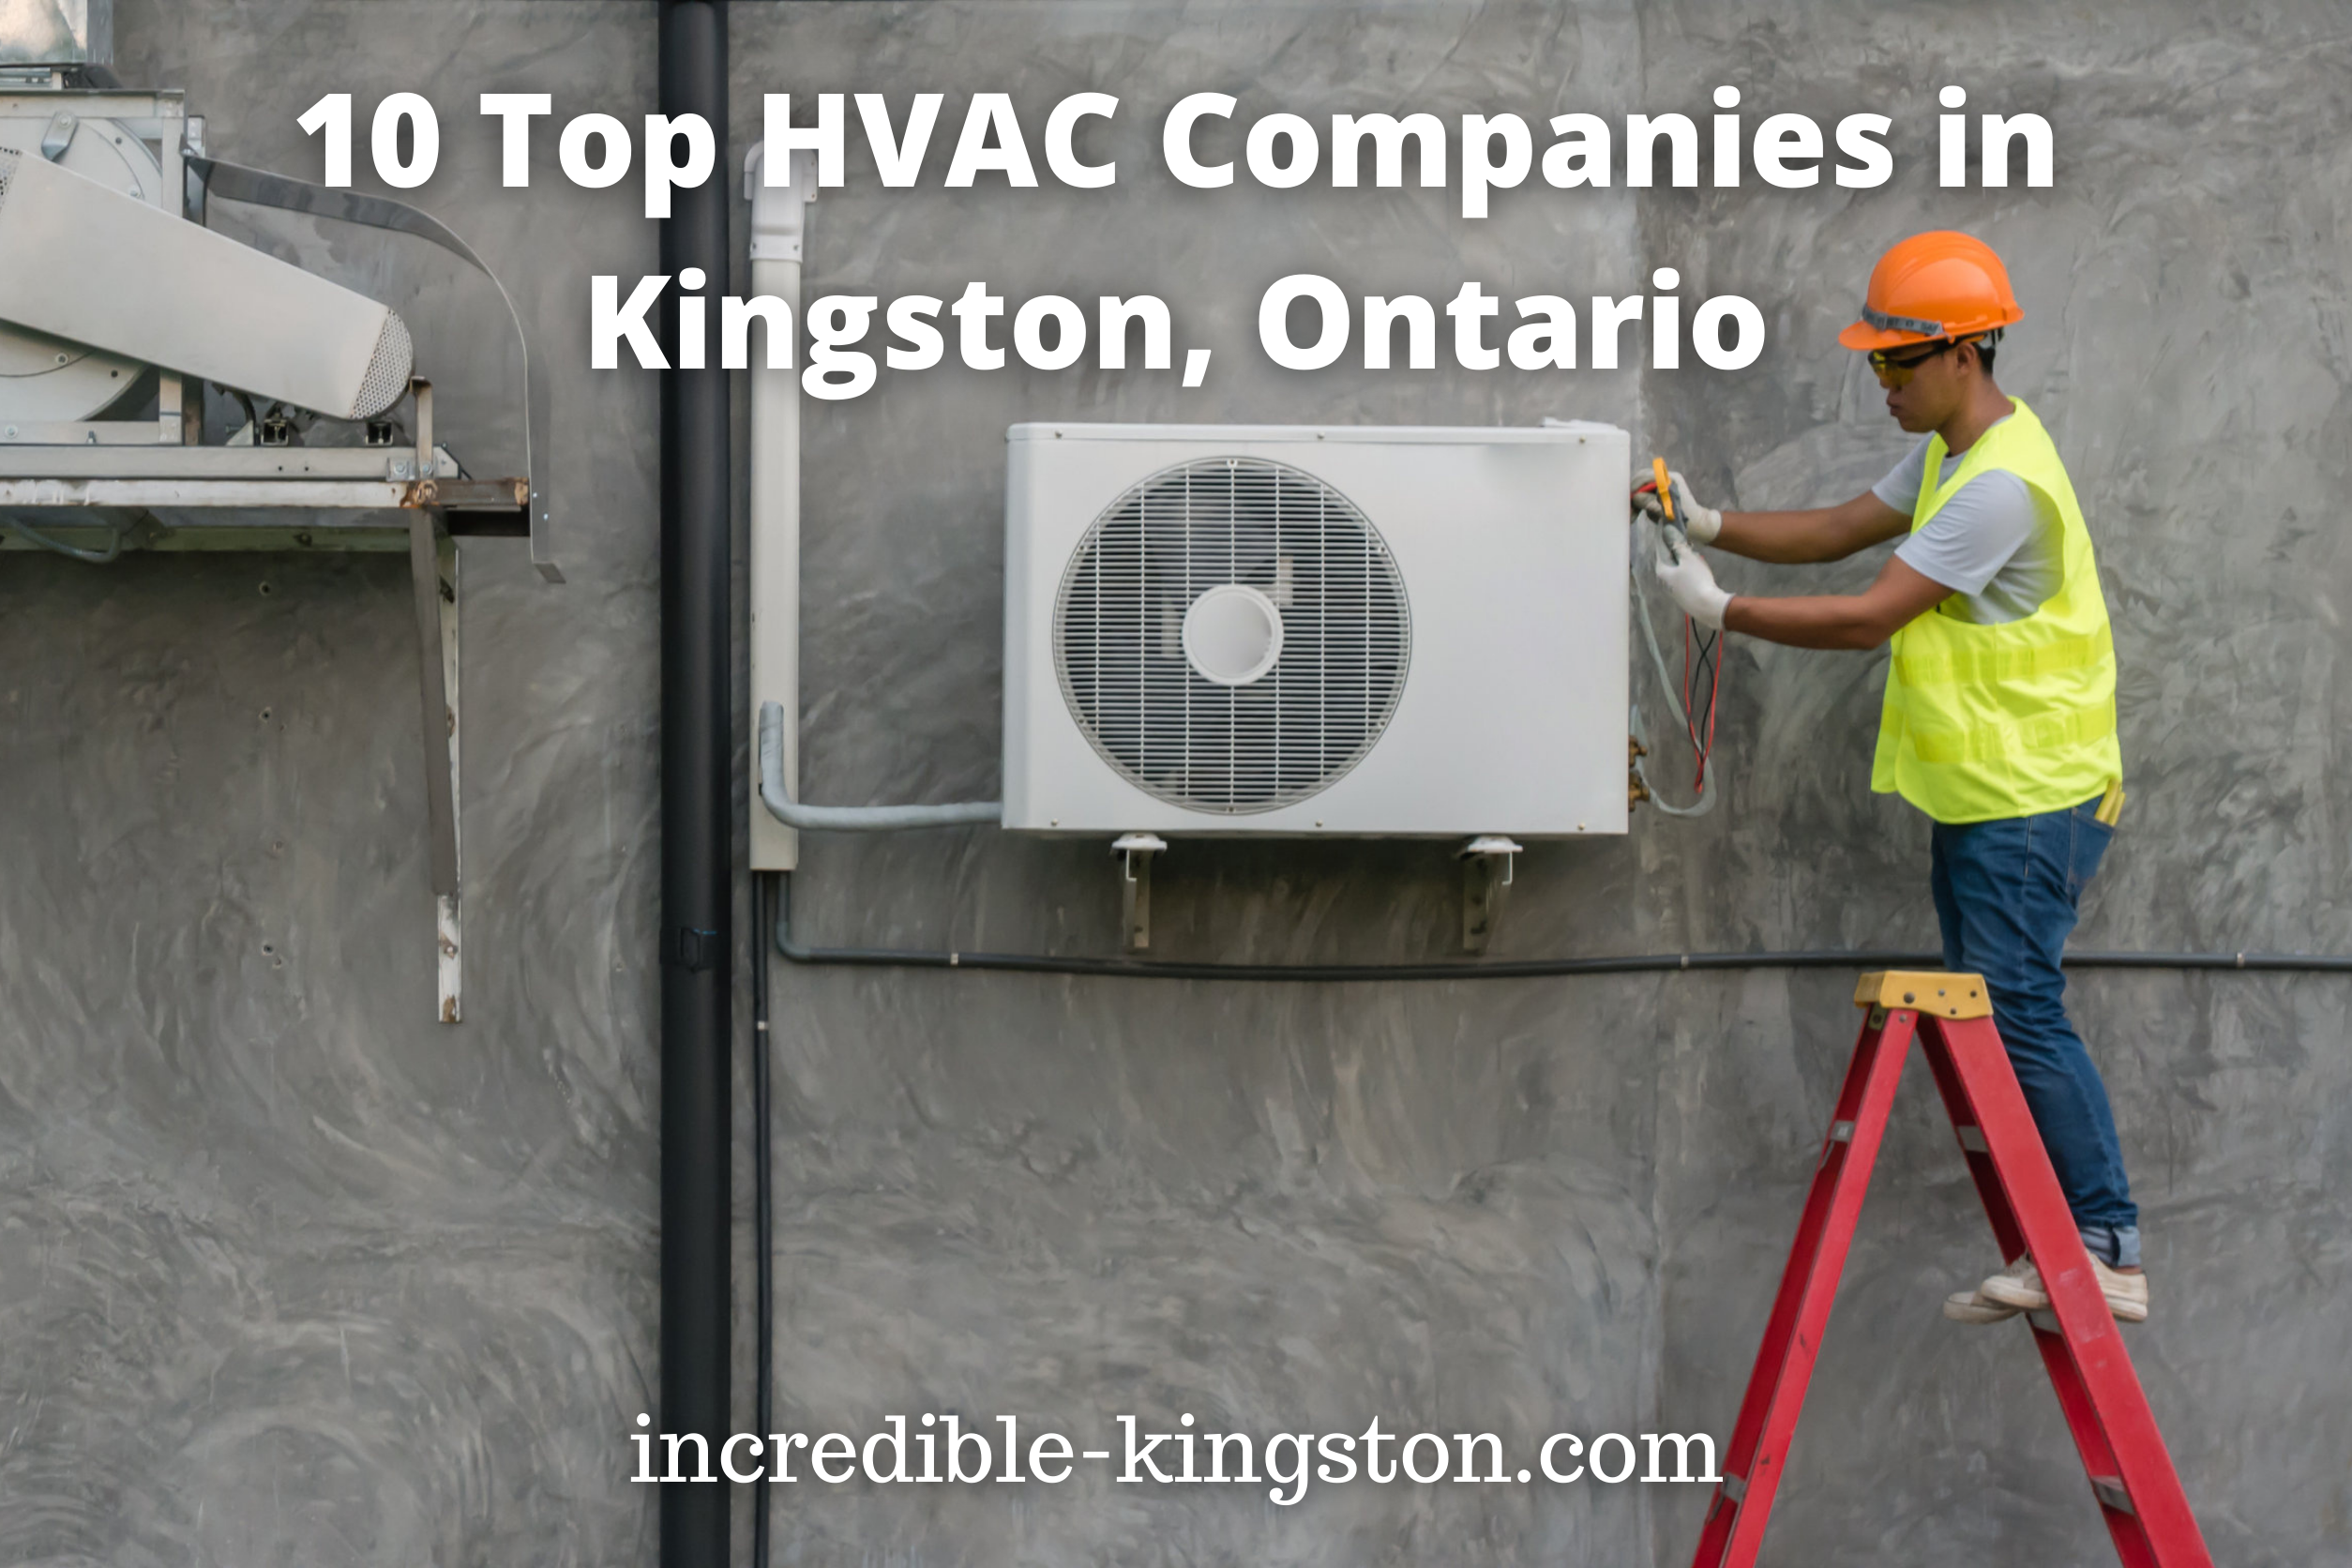 HVAC companies in Kingston, Ontario